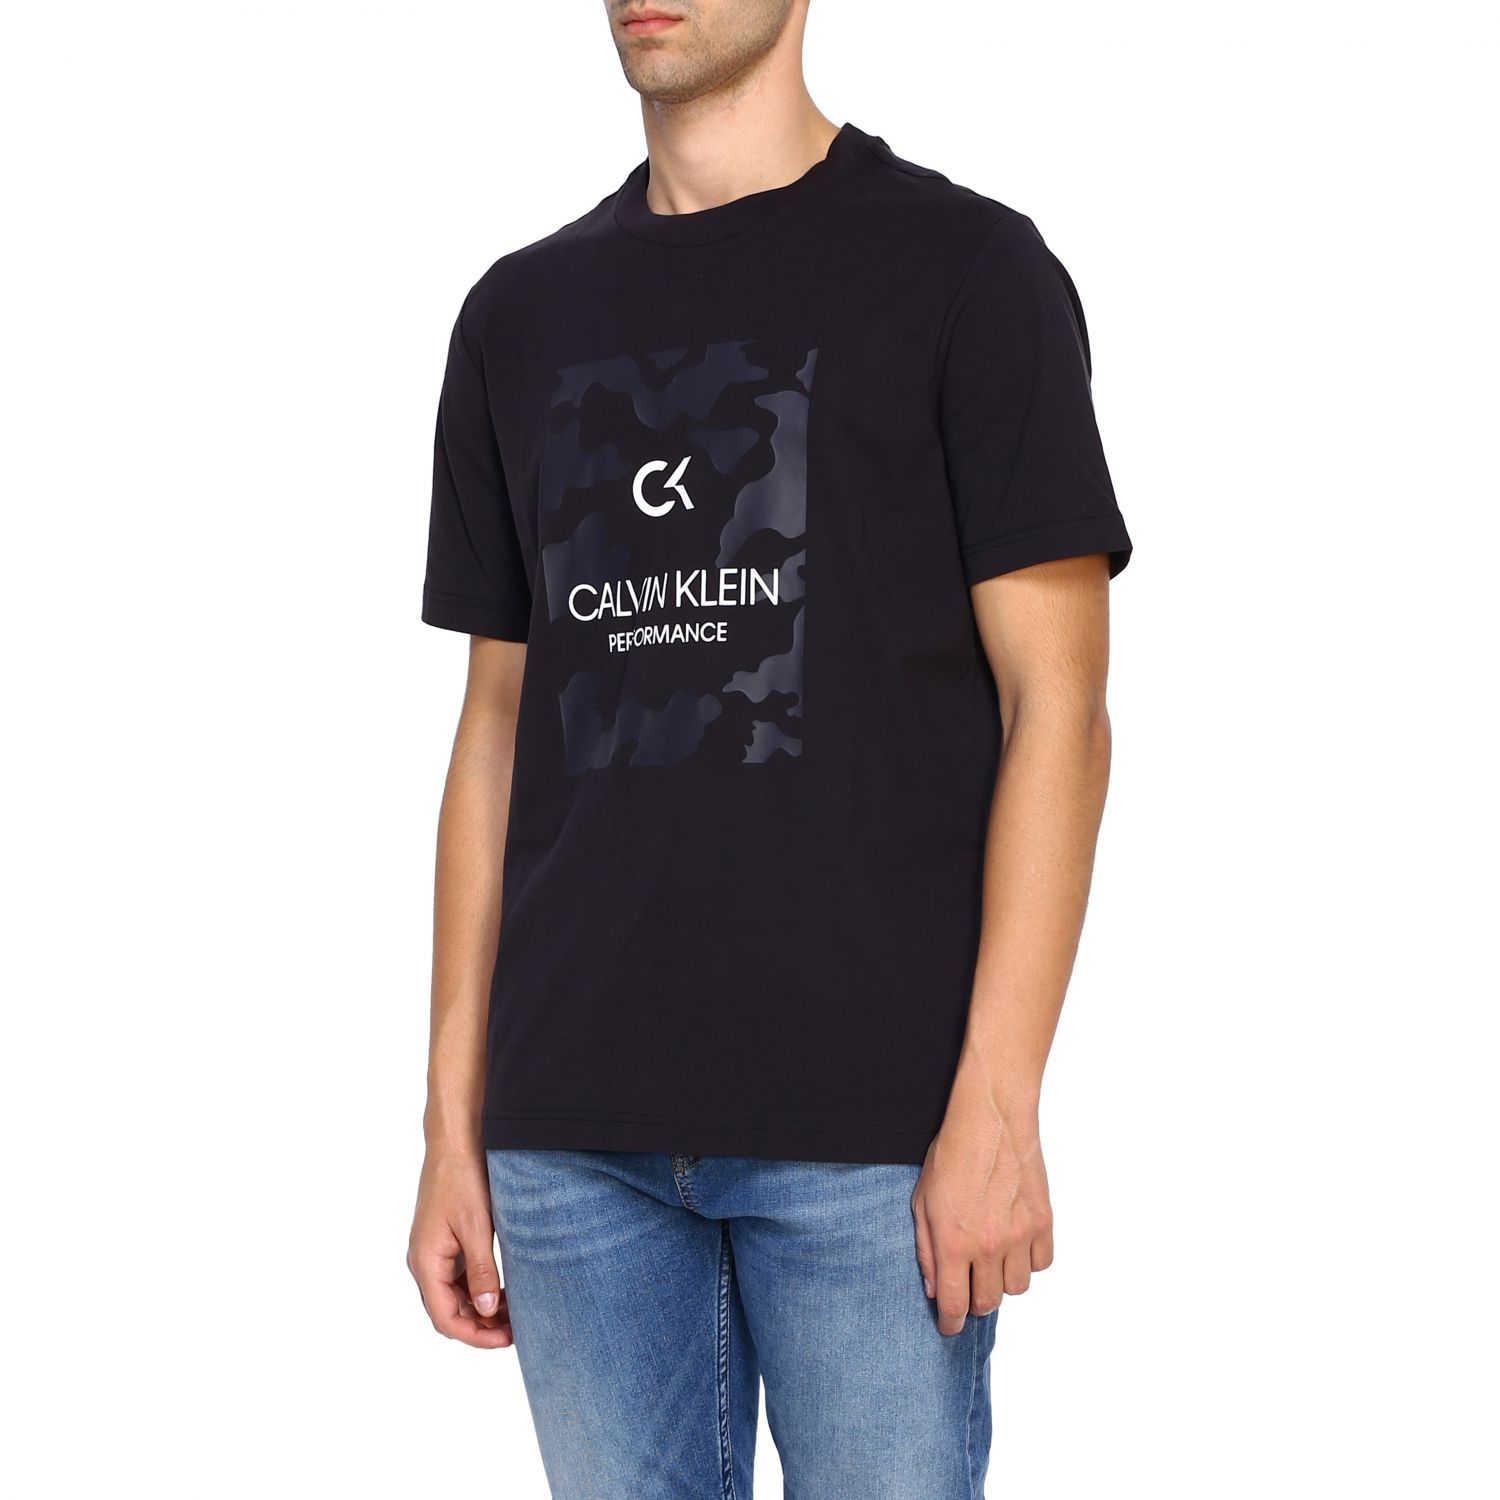 Calvin Klein Performance Shirt Sale Online, 58% OFF 